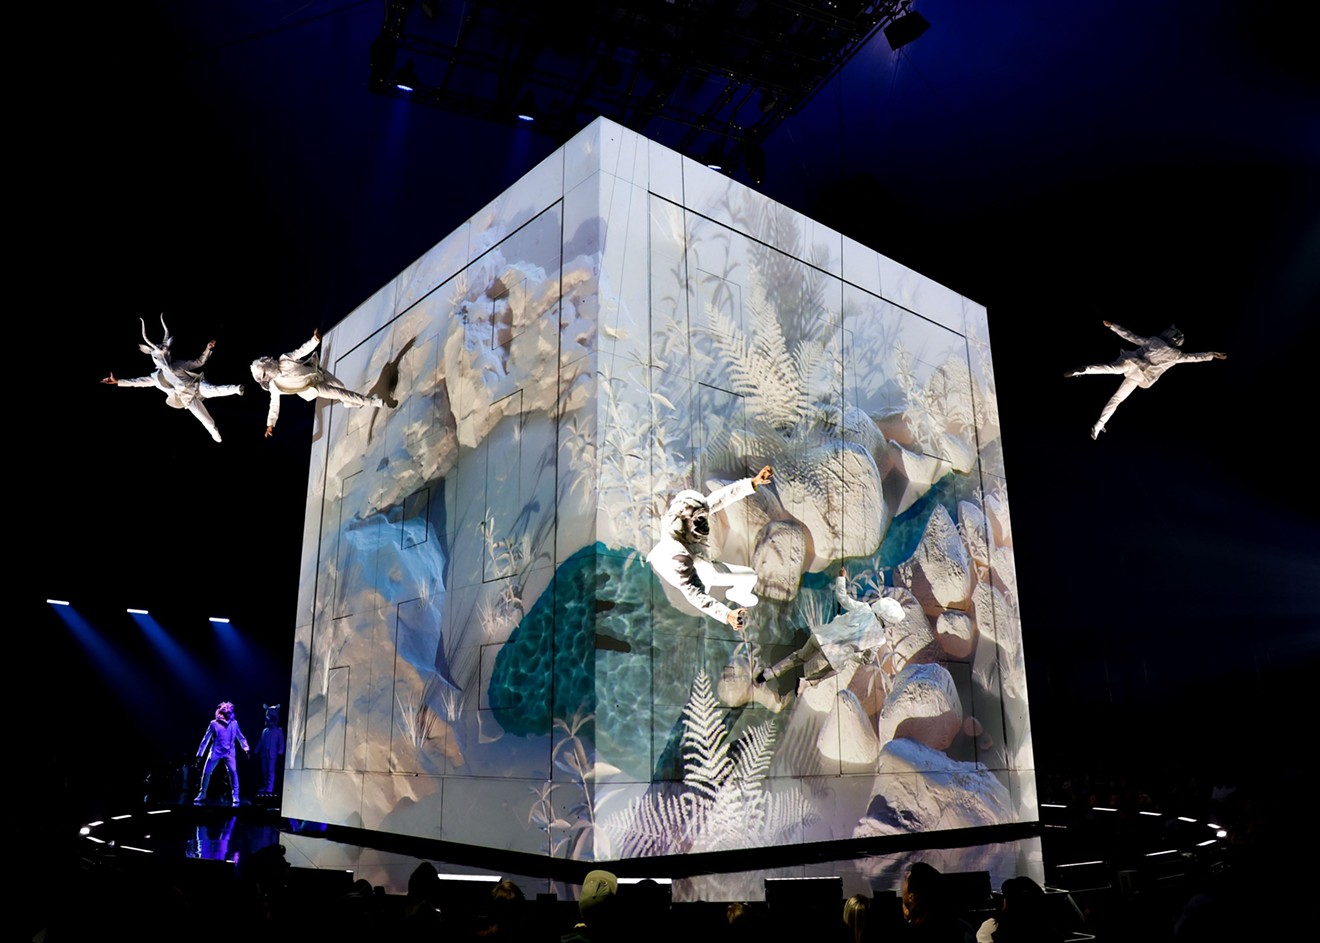 Cirque du Soleil's latest show, Echo, lands at Gulfstream Park February 22-April 7.